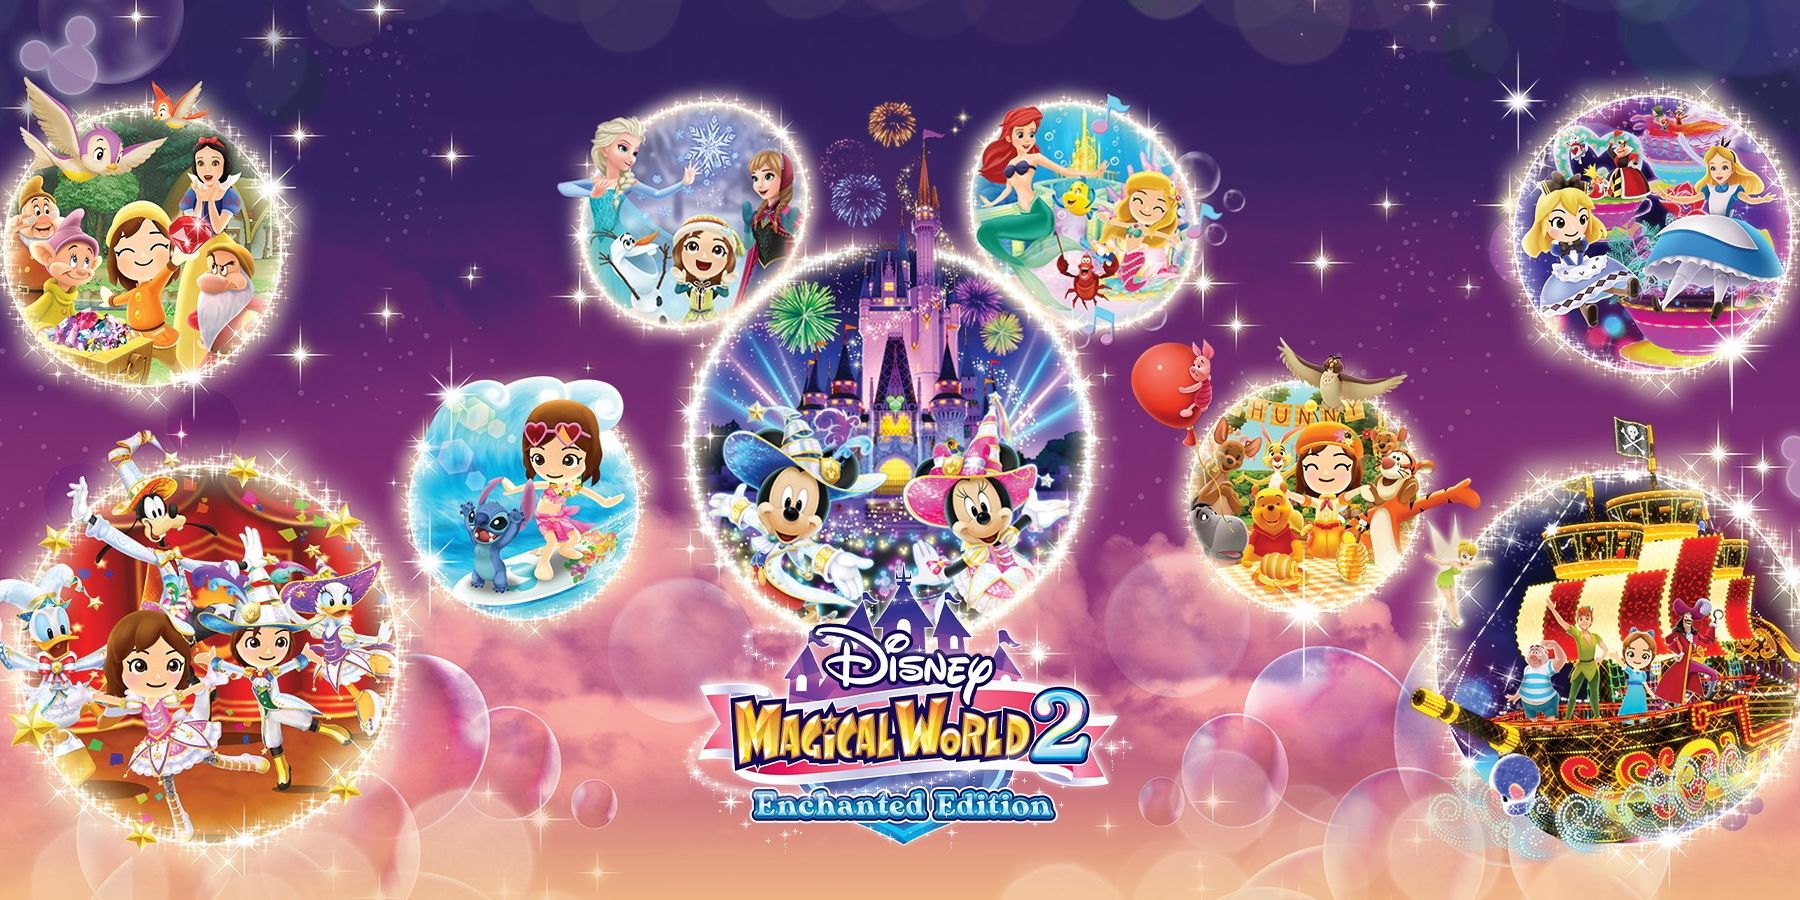 Disney Magical World 2: Enchanted Edition που έρχεται να αλλάξει φέτος